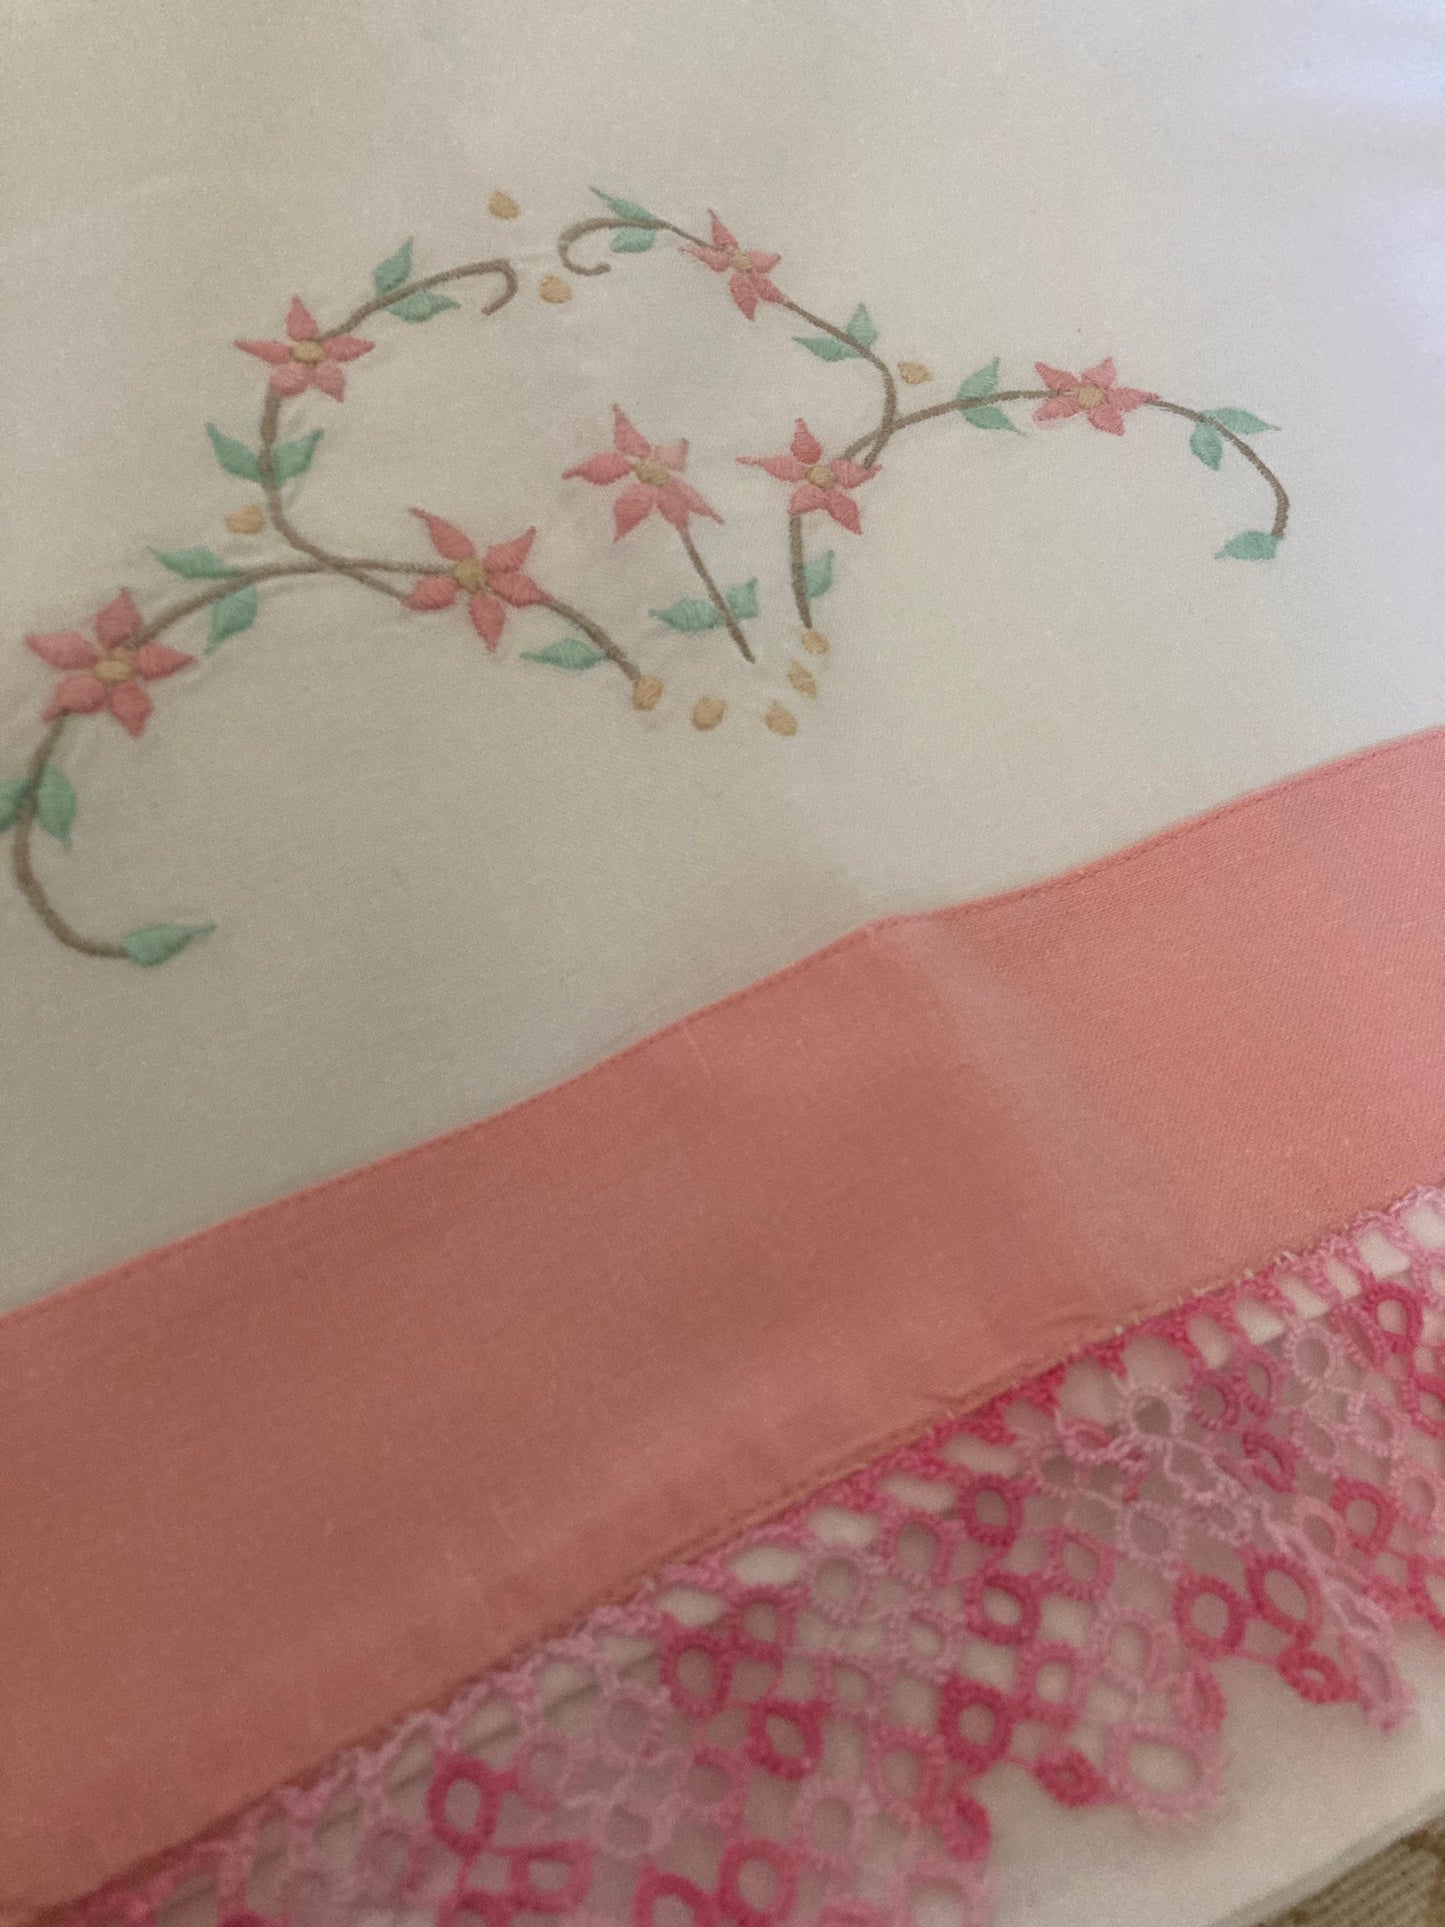 Pair pillowcases bedding white cotton floral flower 28 x 18 white pink crochet edge